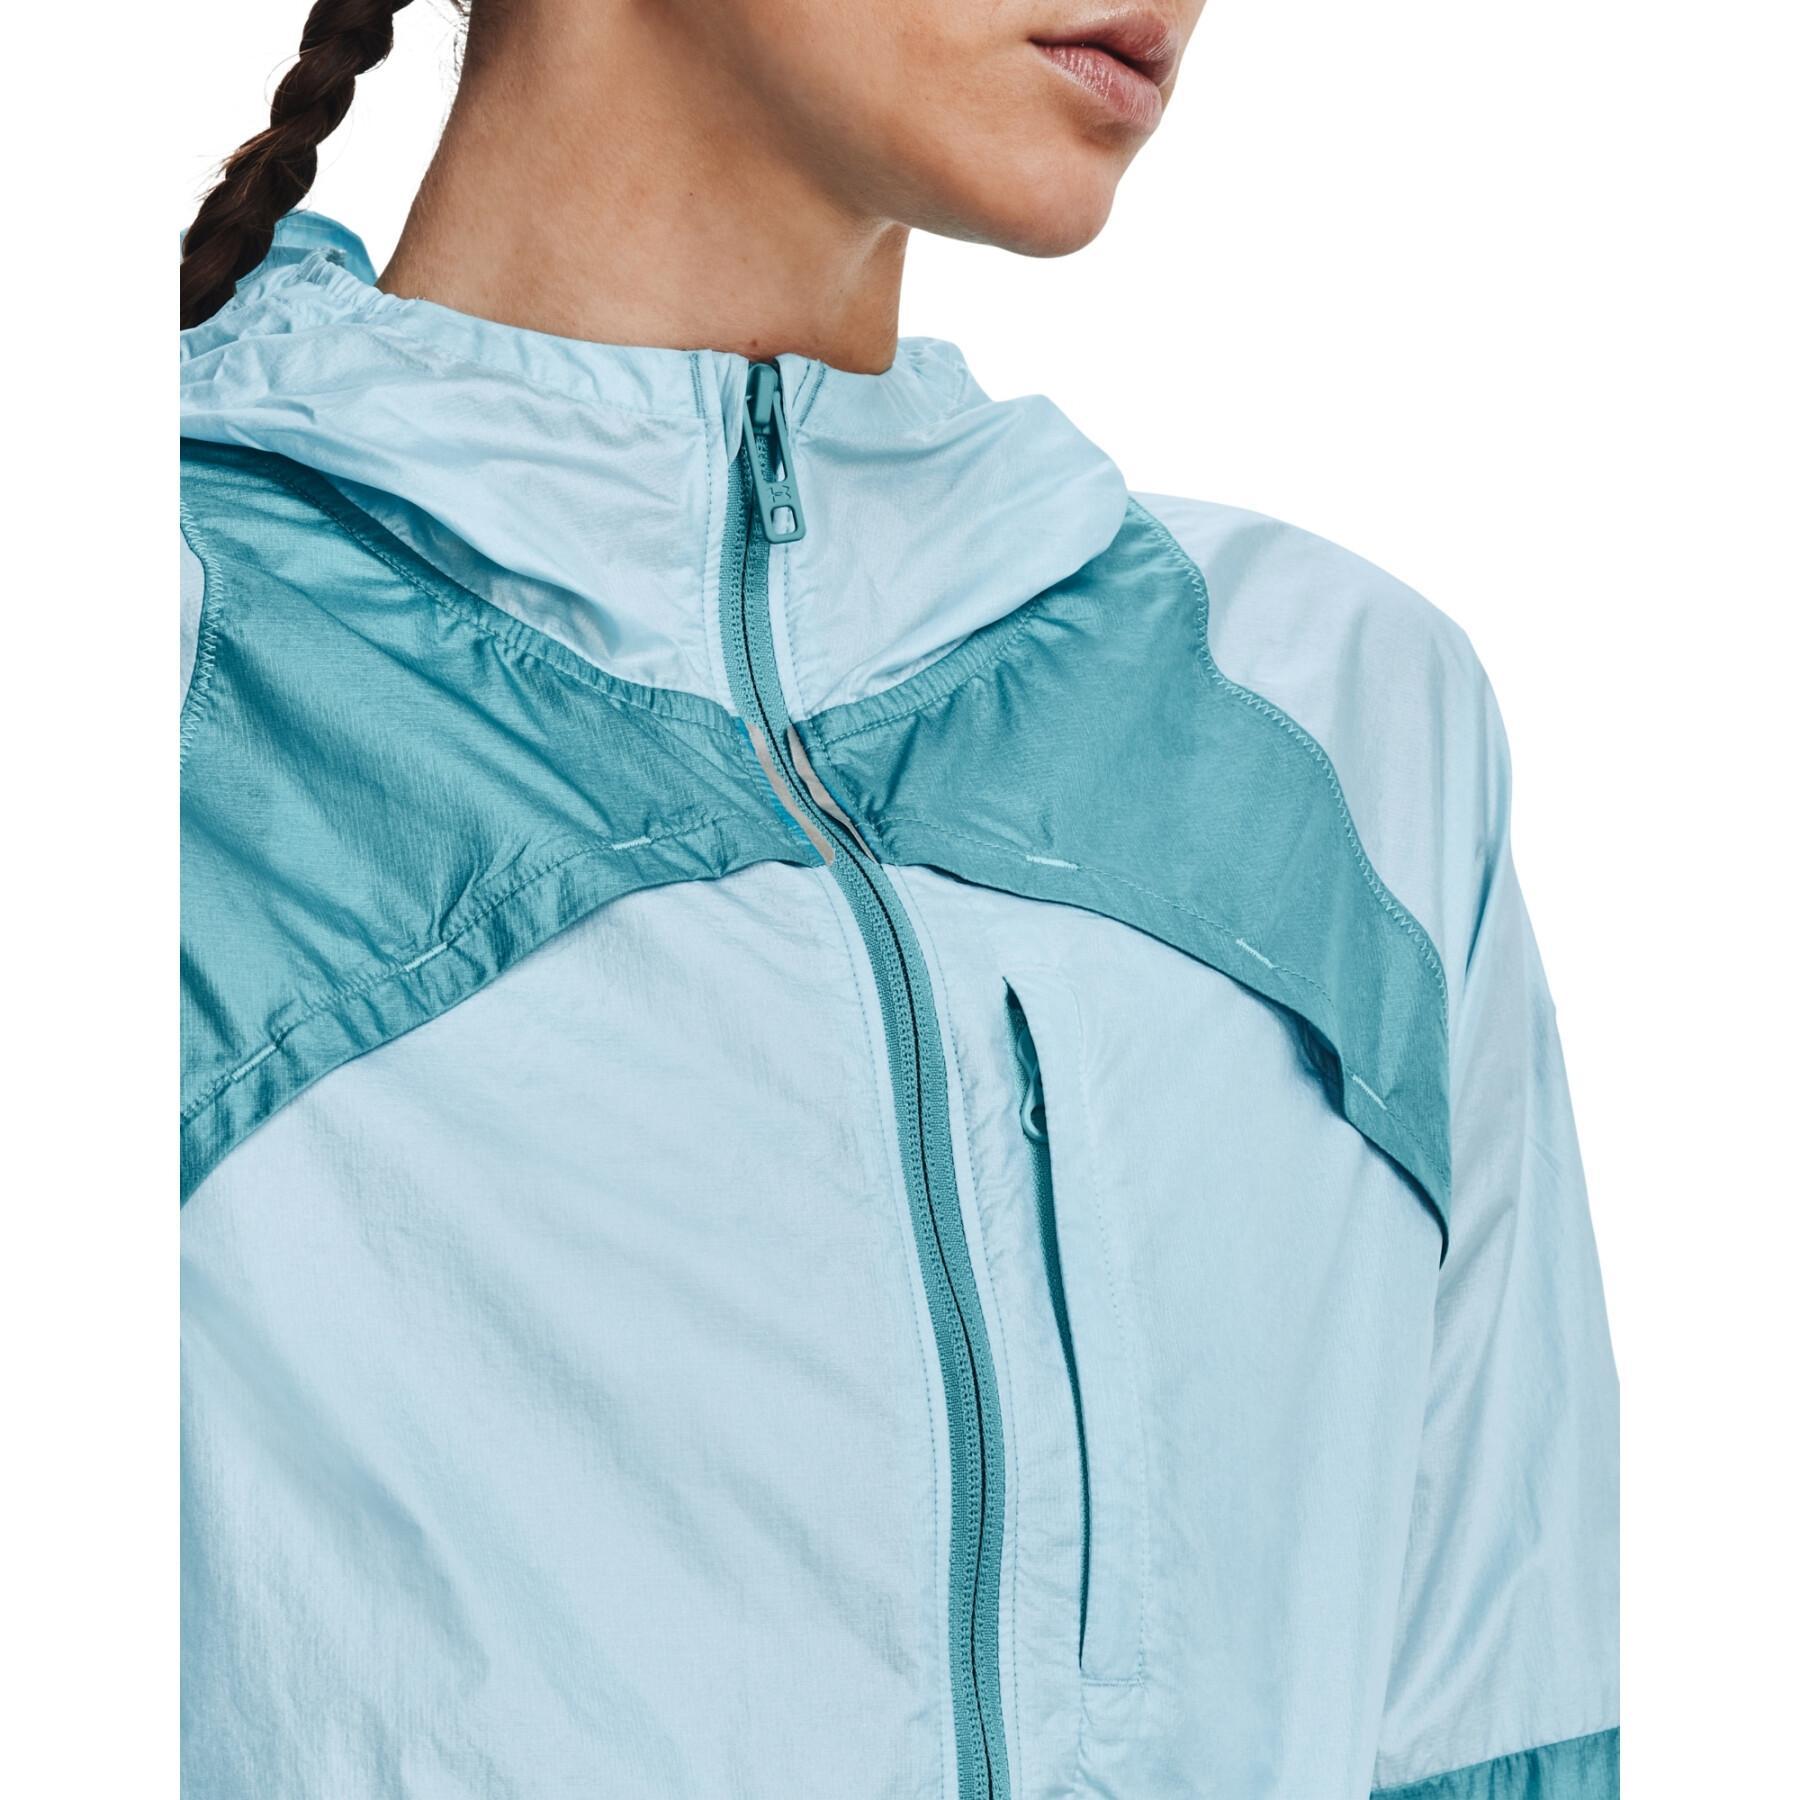 Women's waterproof jacket Under Armour Impasse trail